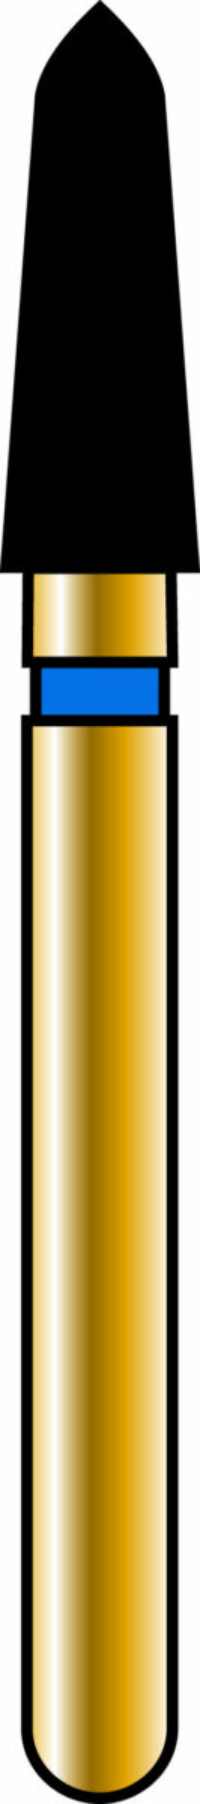 Pointed Taper 21-6mm Gold Diamond Bur - Coarse Grit